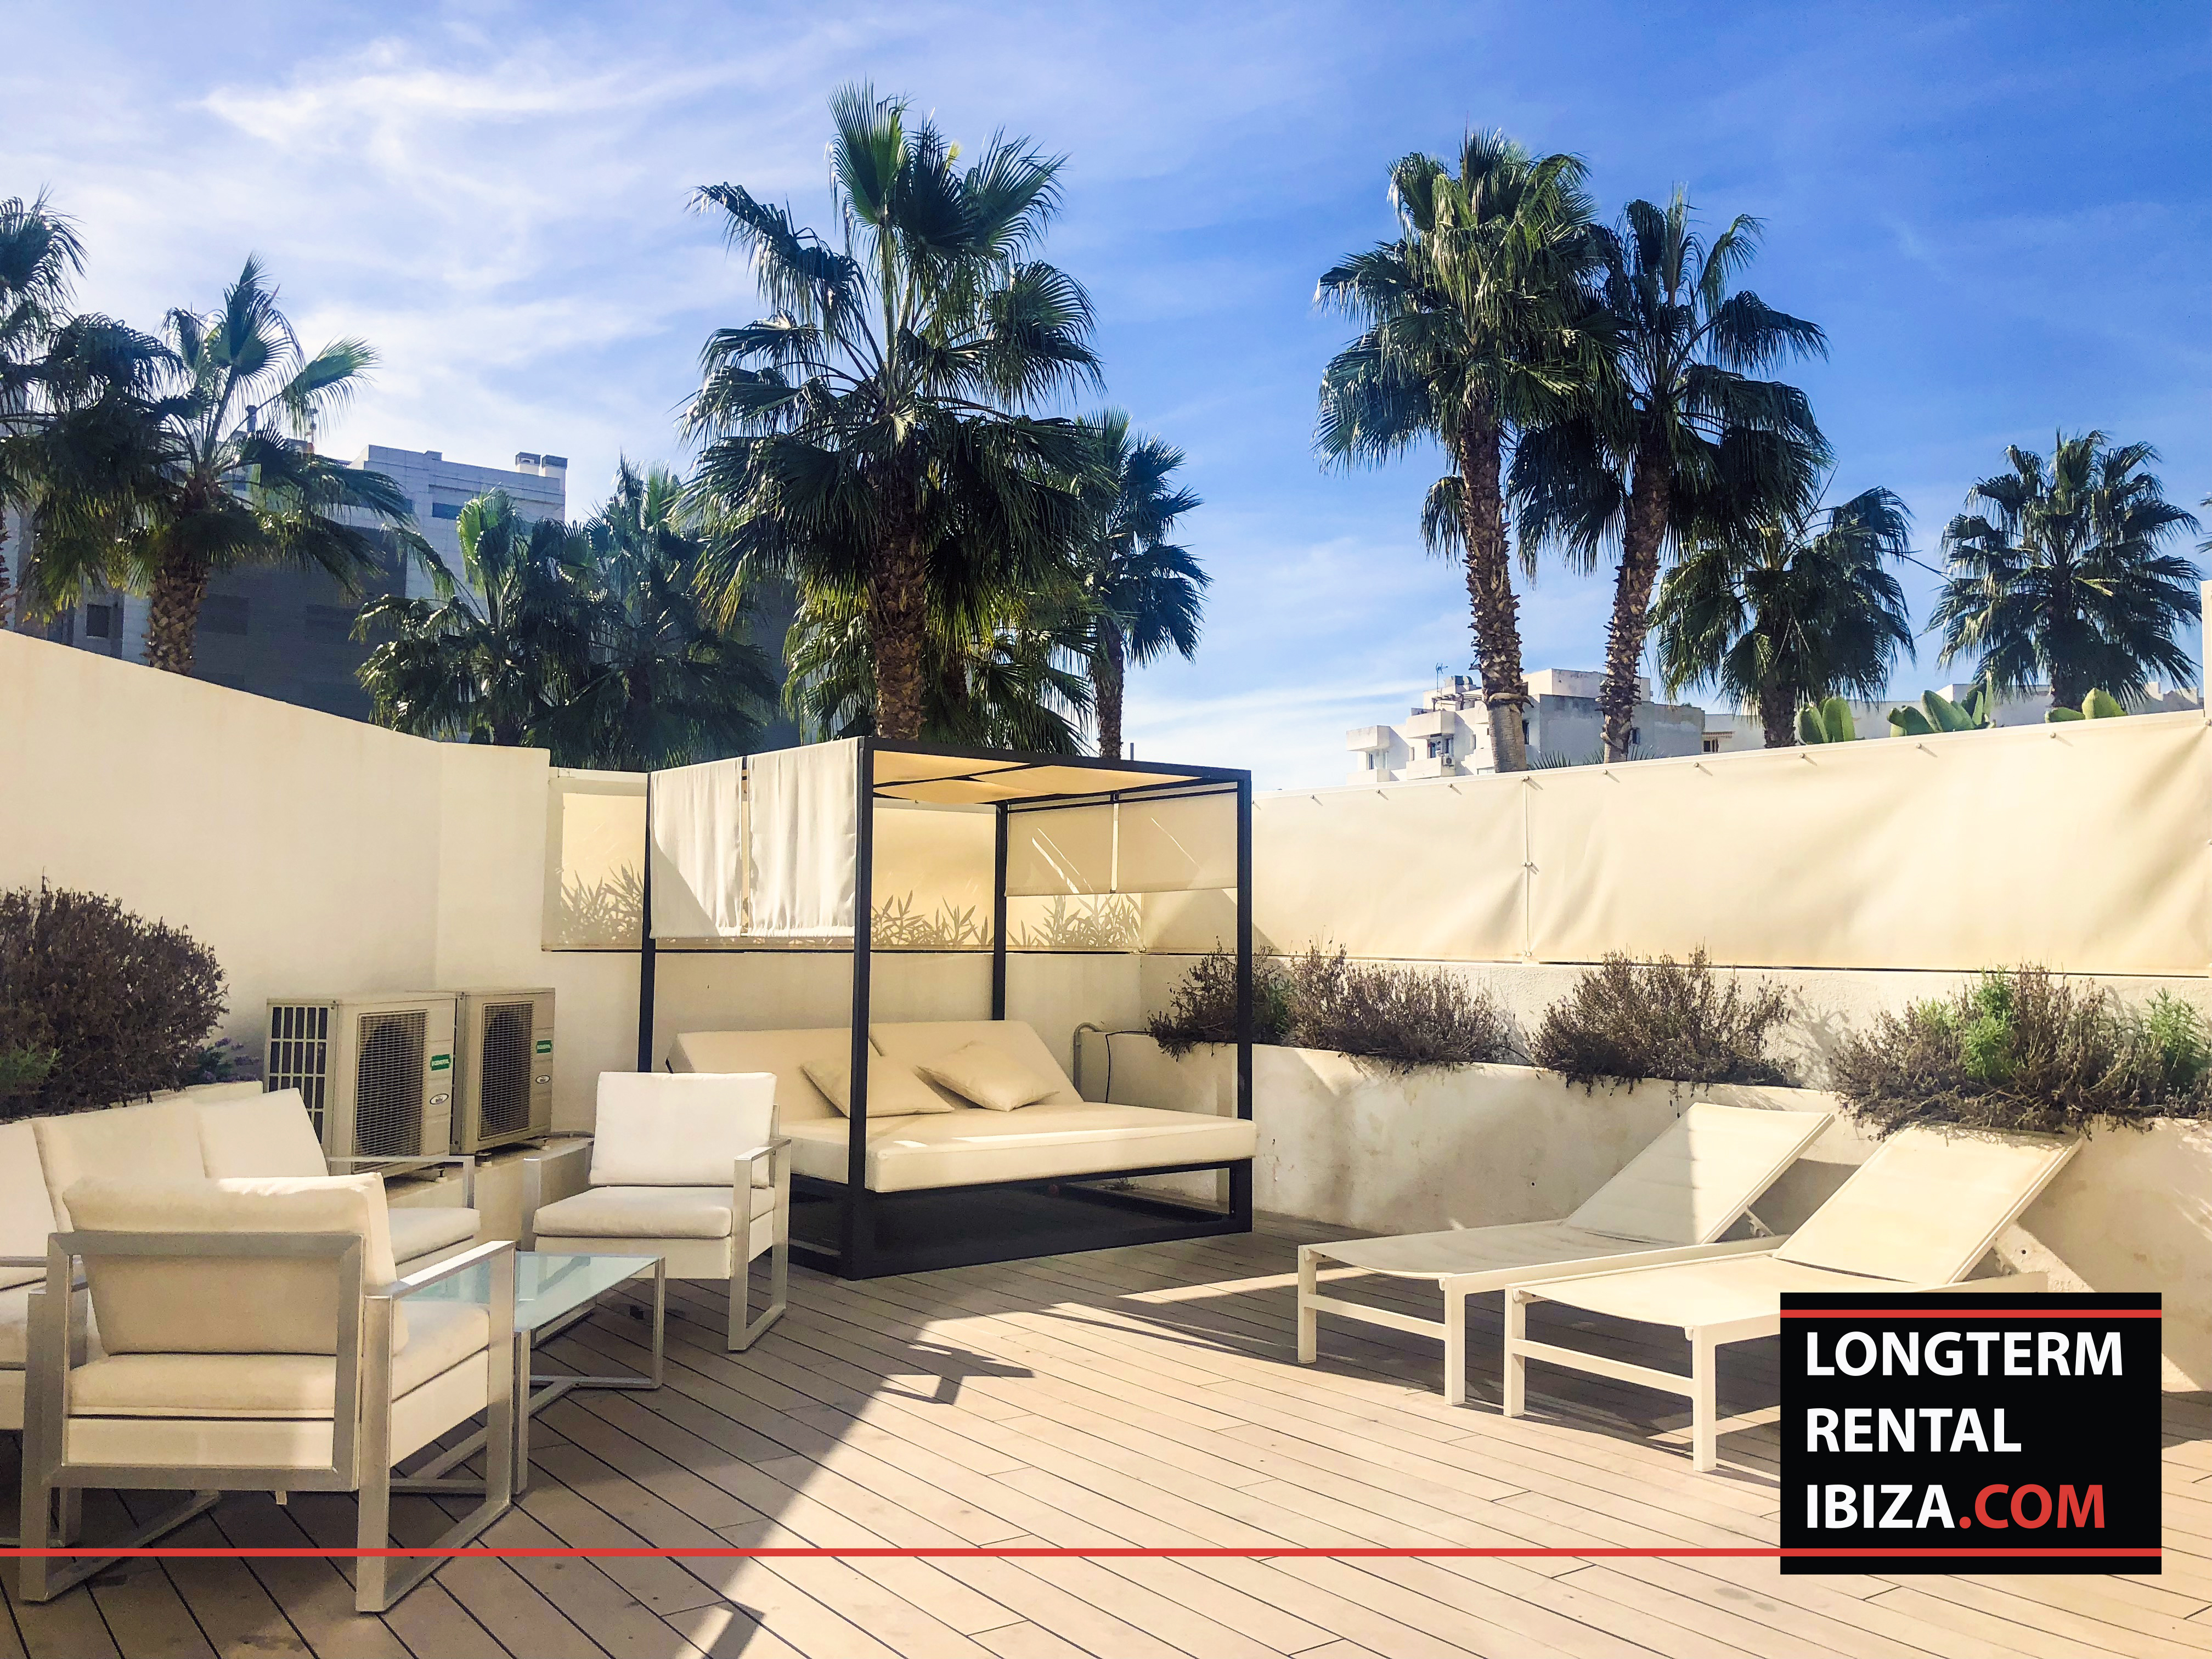 Long term rental Ibiza.